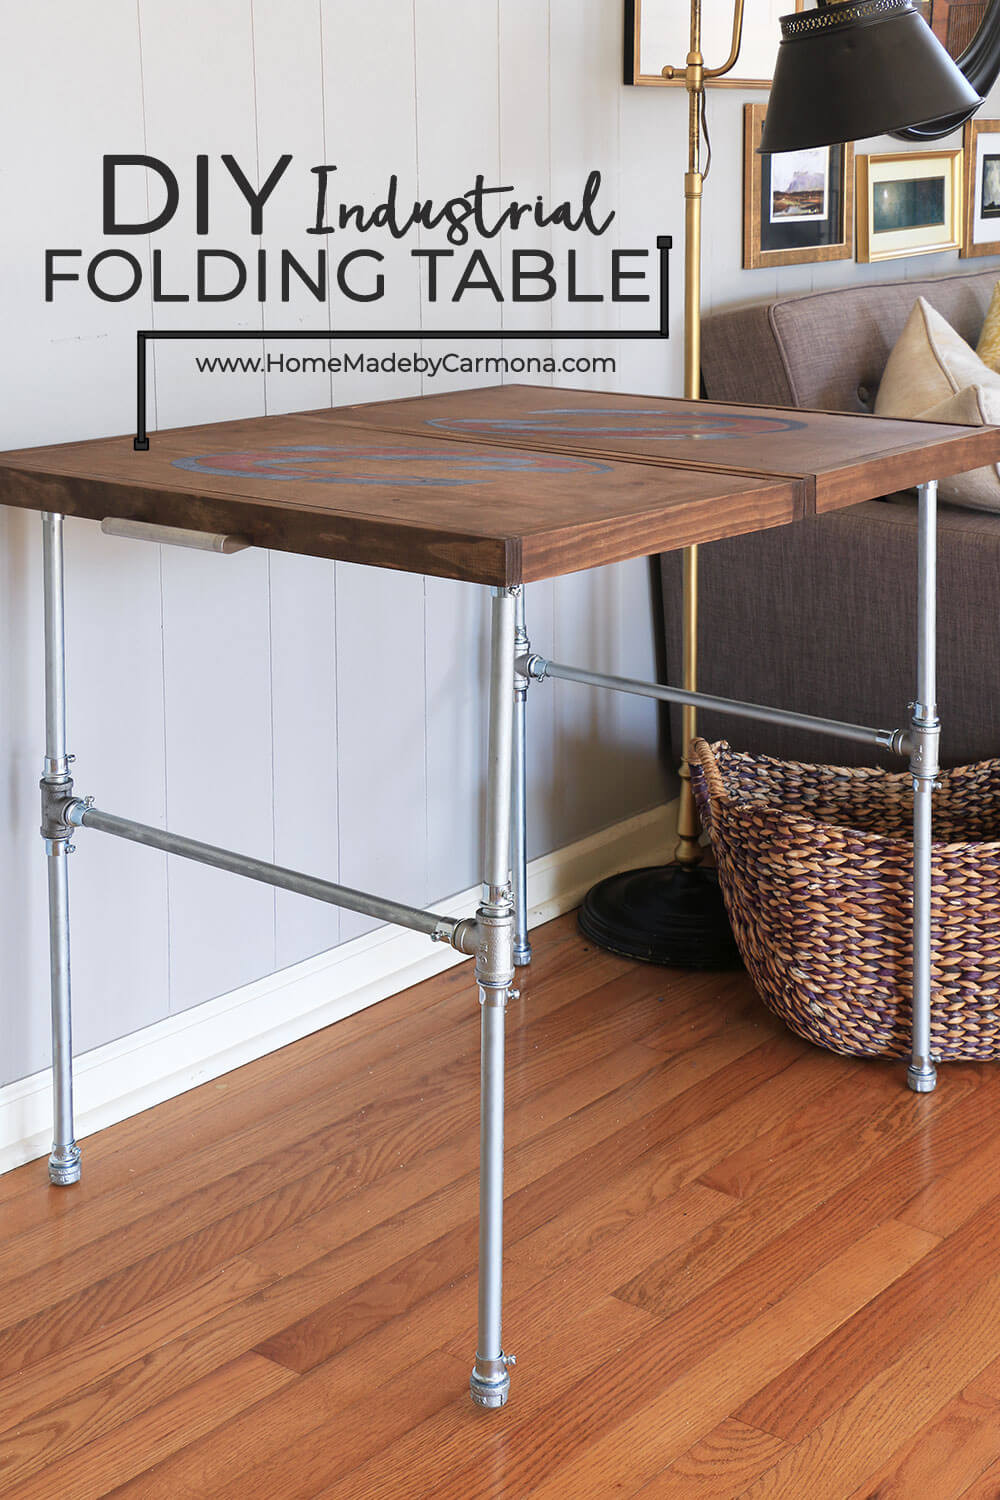 DIY Folding Table Plans
 DIY Industrial Folding Table Home Made By Carmona